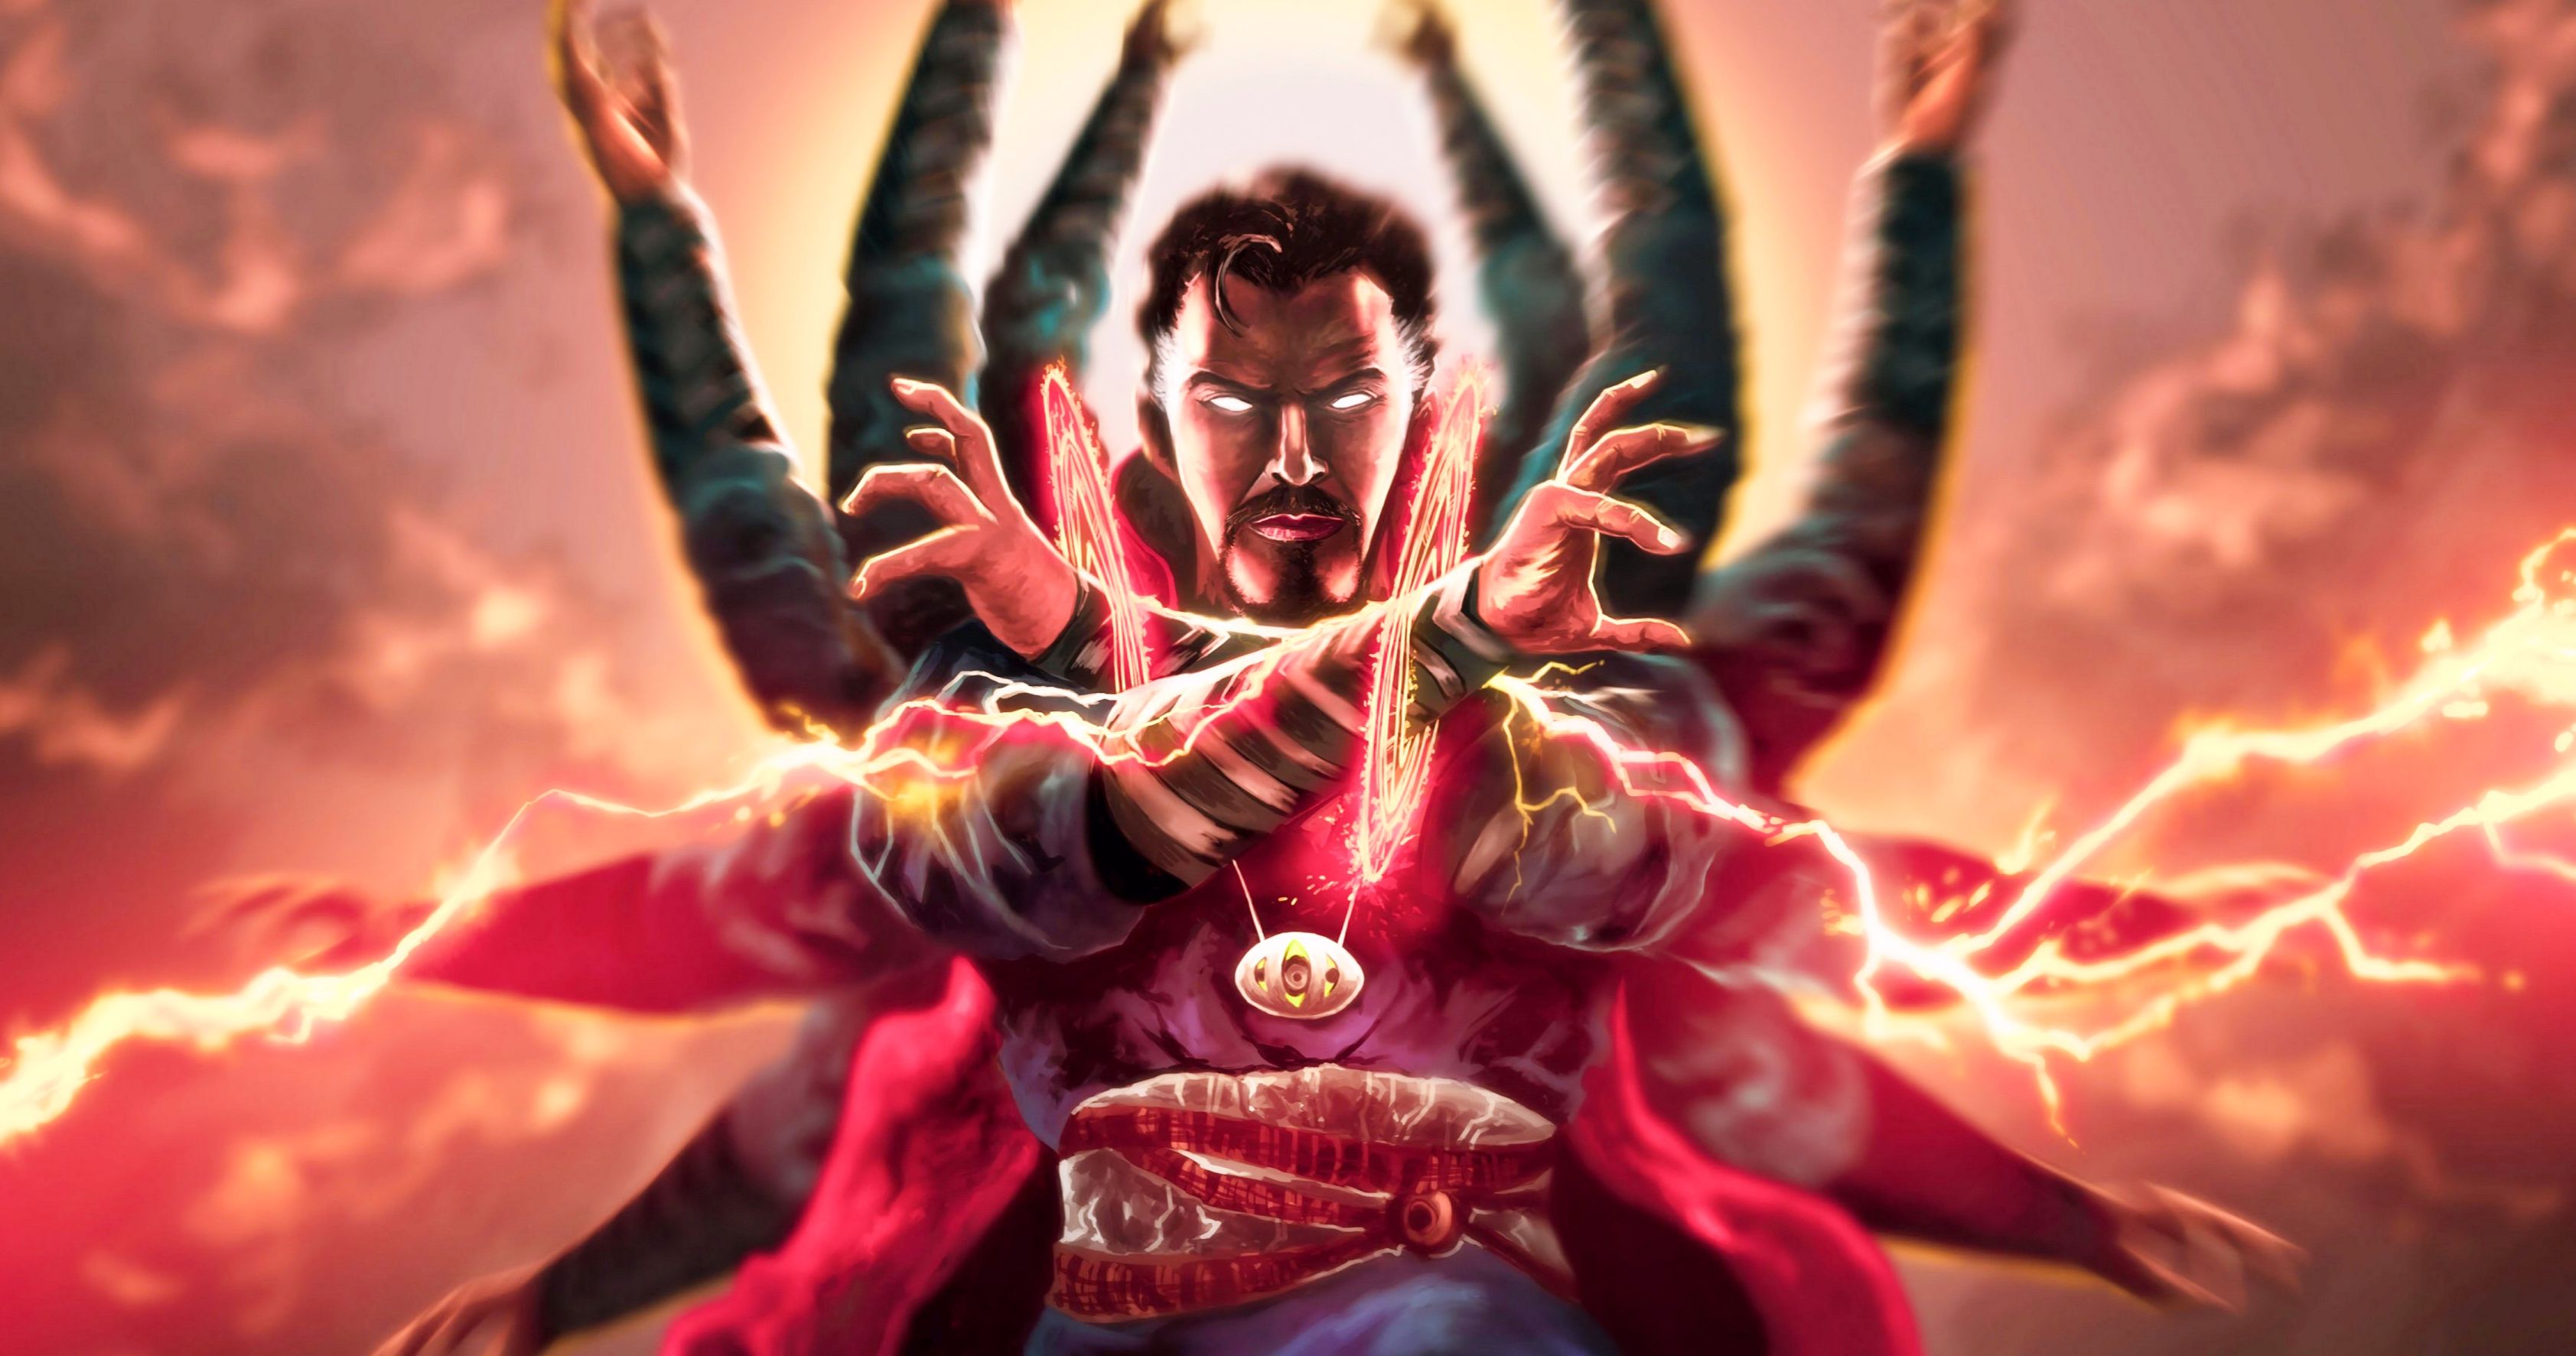 Sam Raimi Ranks Doctor Strange as 5th Greatest Comic Book Character